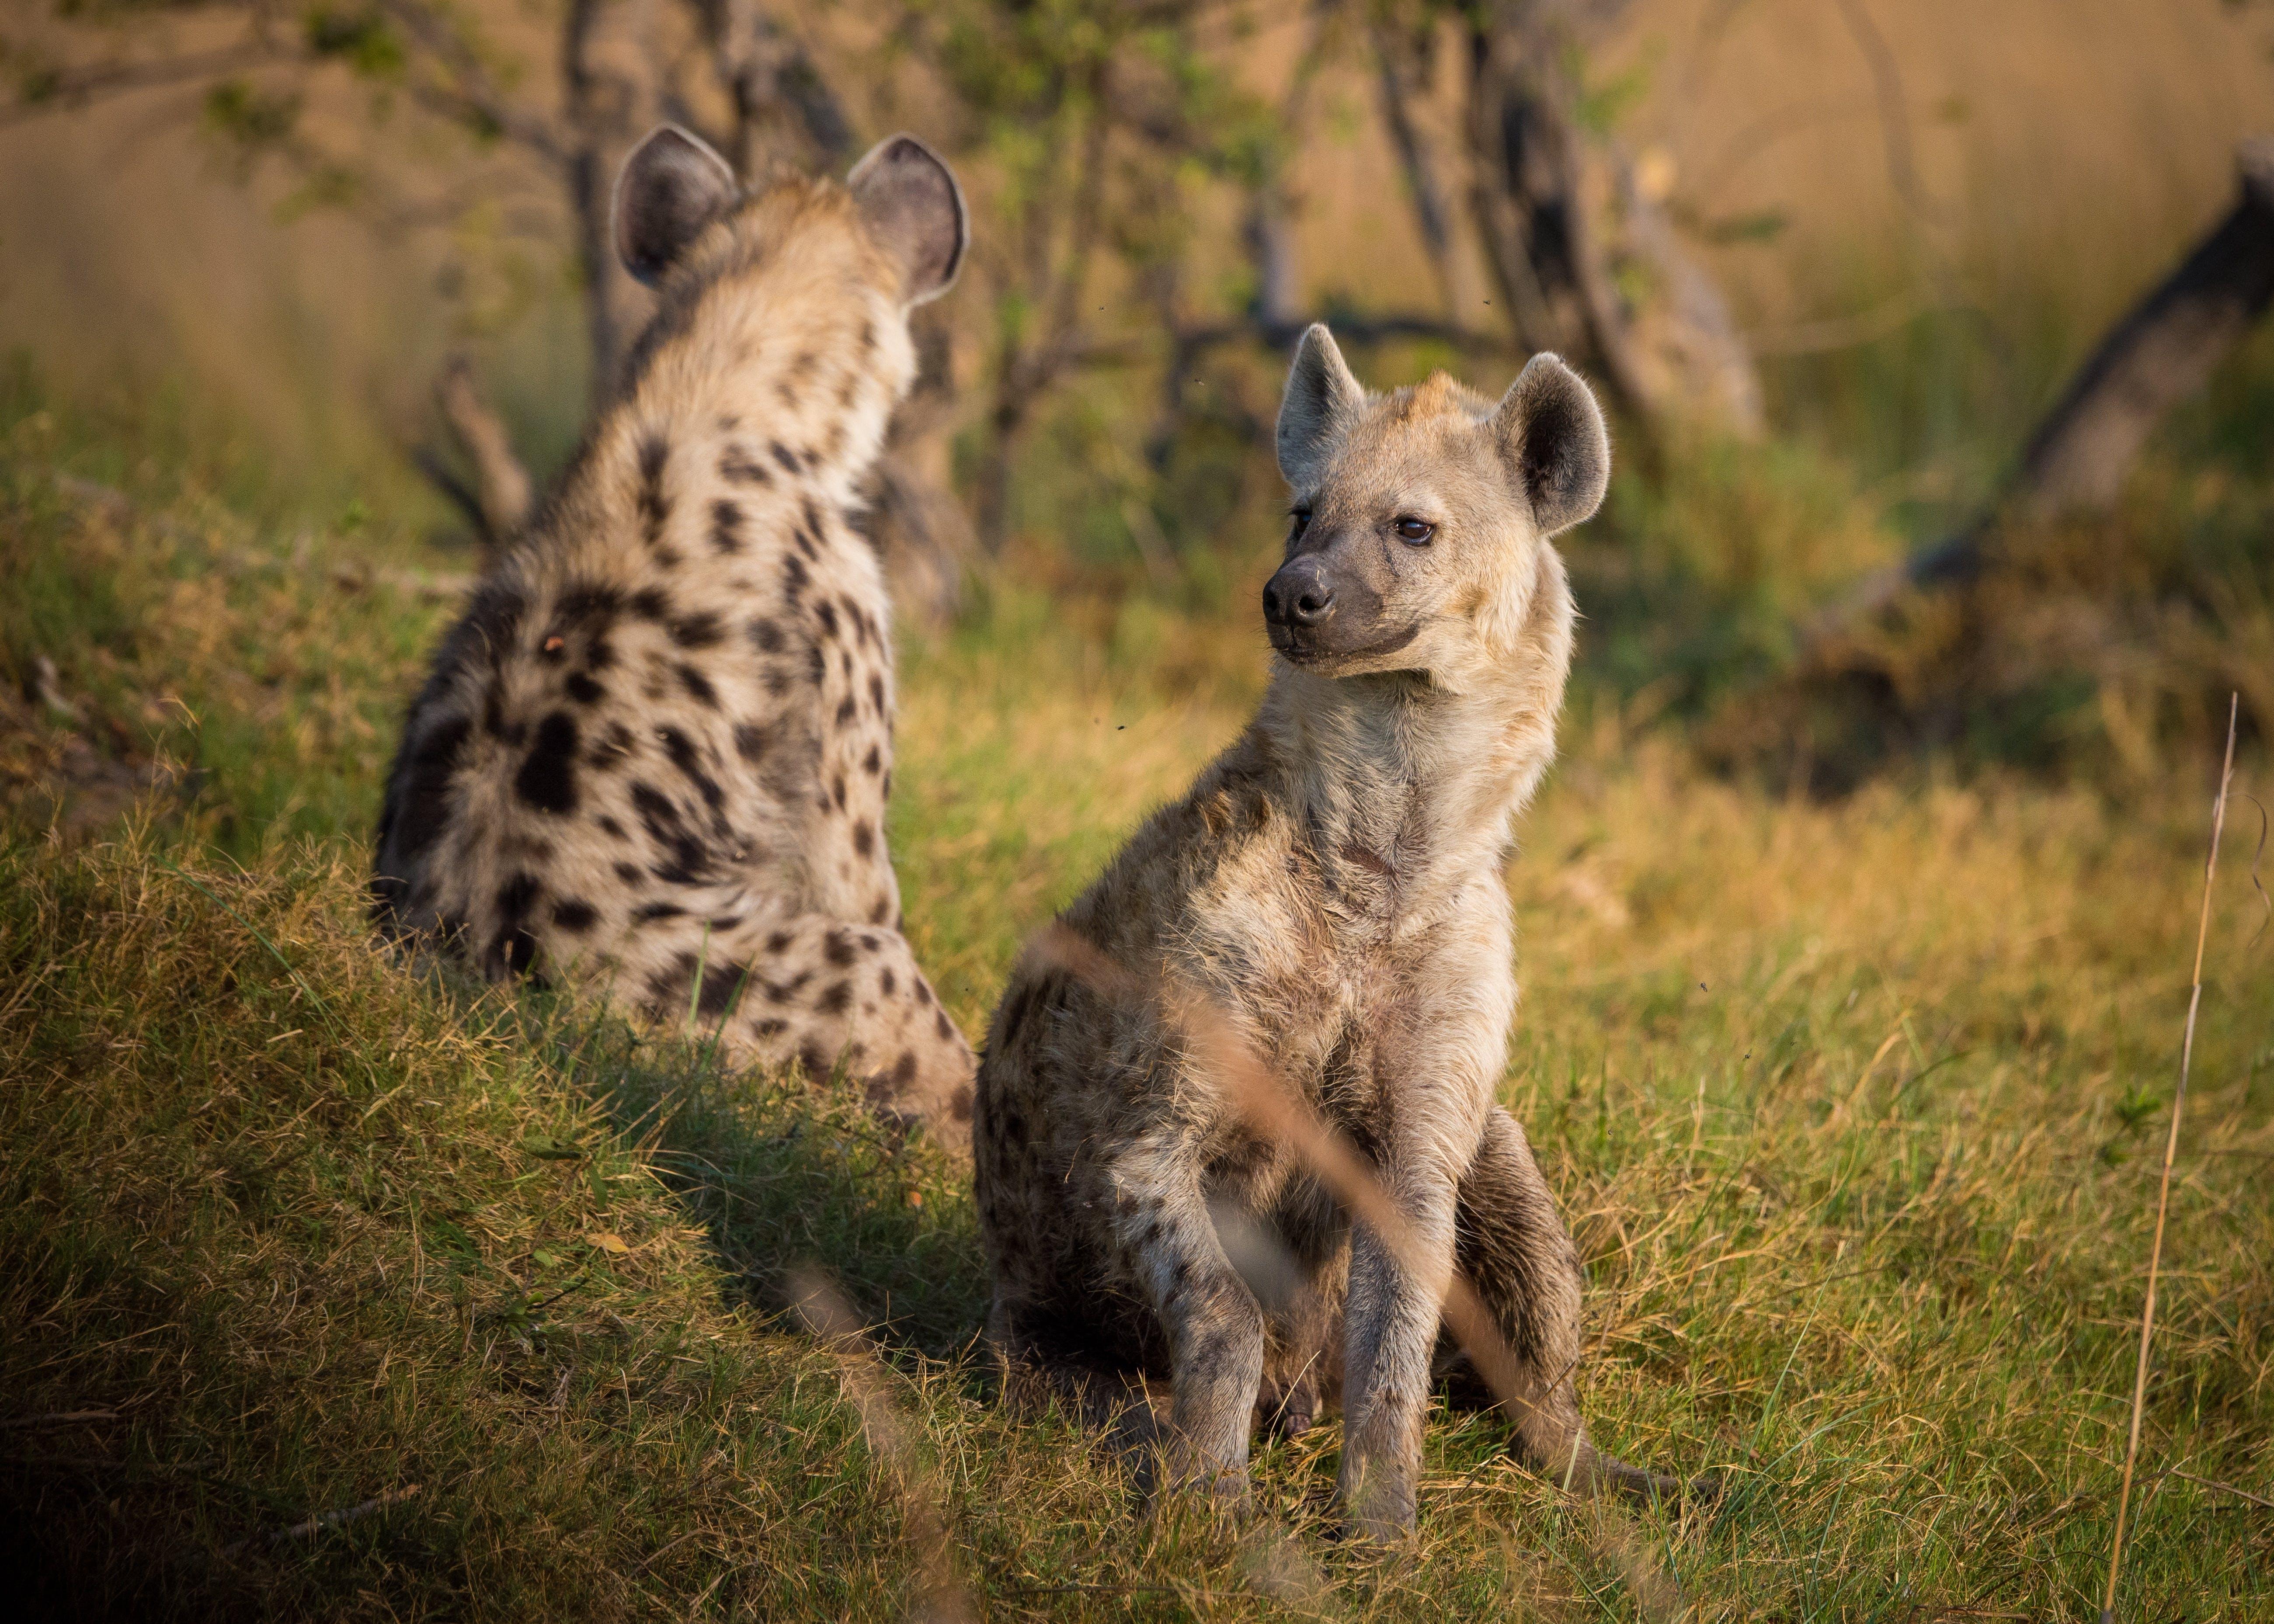 How heavy are hyenas? 